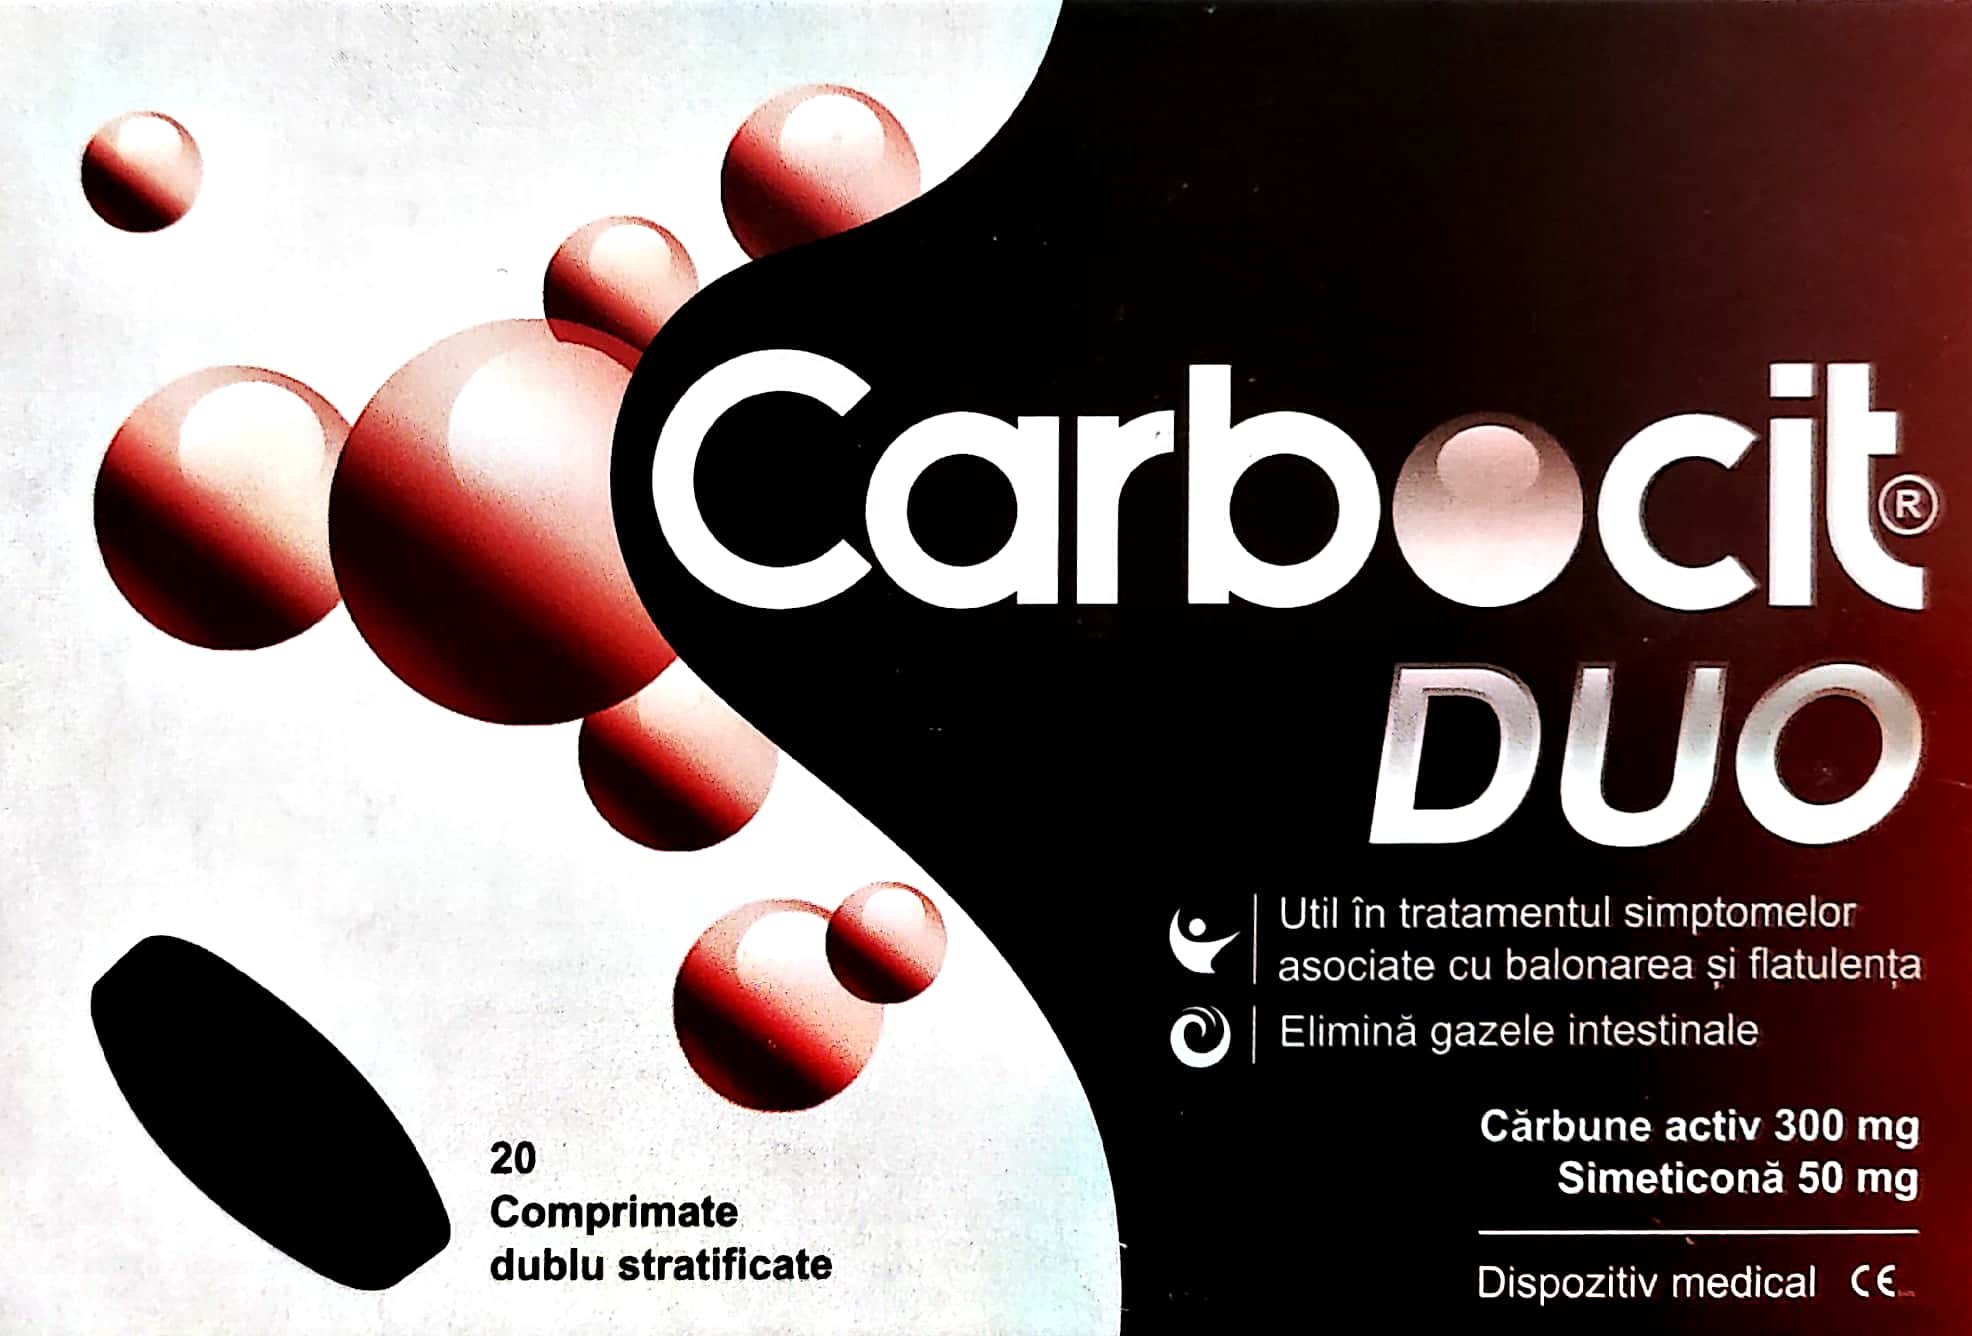 Afectiuni digestive - Carbocit DUO, 20 comprimate dublu stratificate, Biofarm
, nordpharm.ro